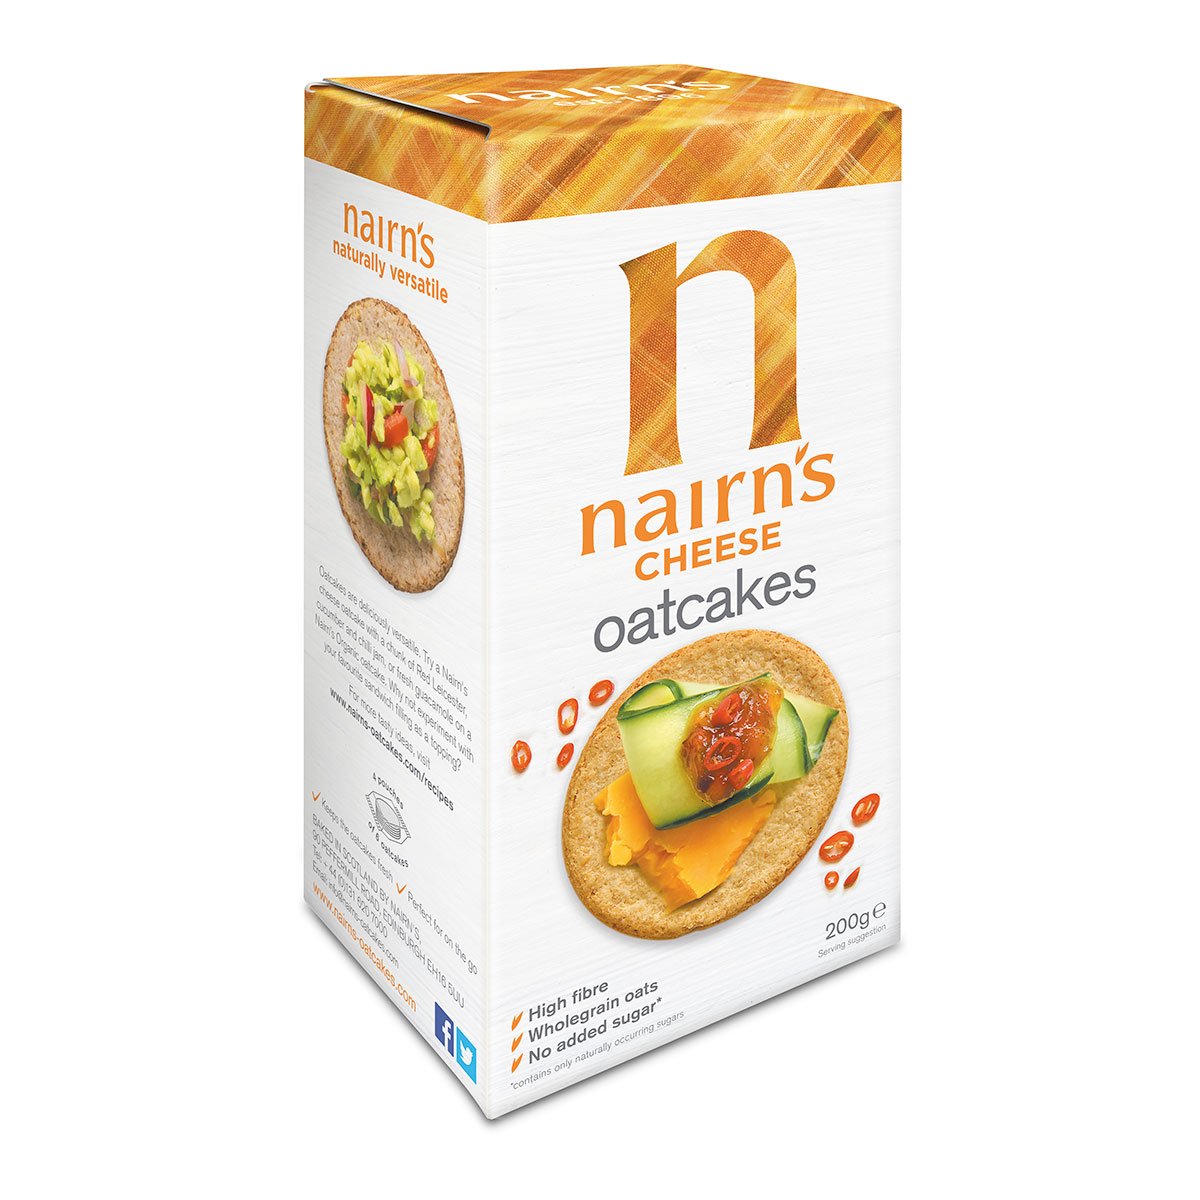 Nairns Cheese Oatcakes, 180g - Just Natural